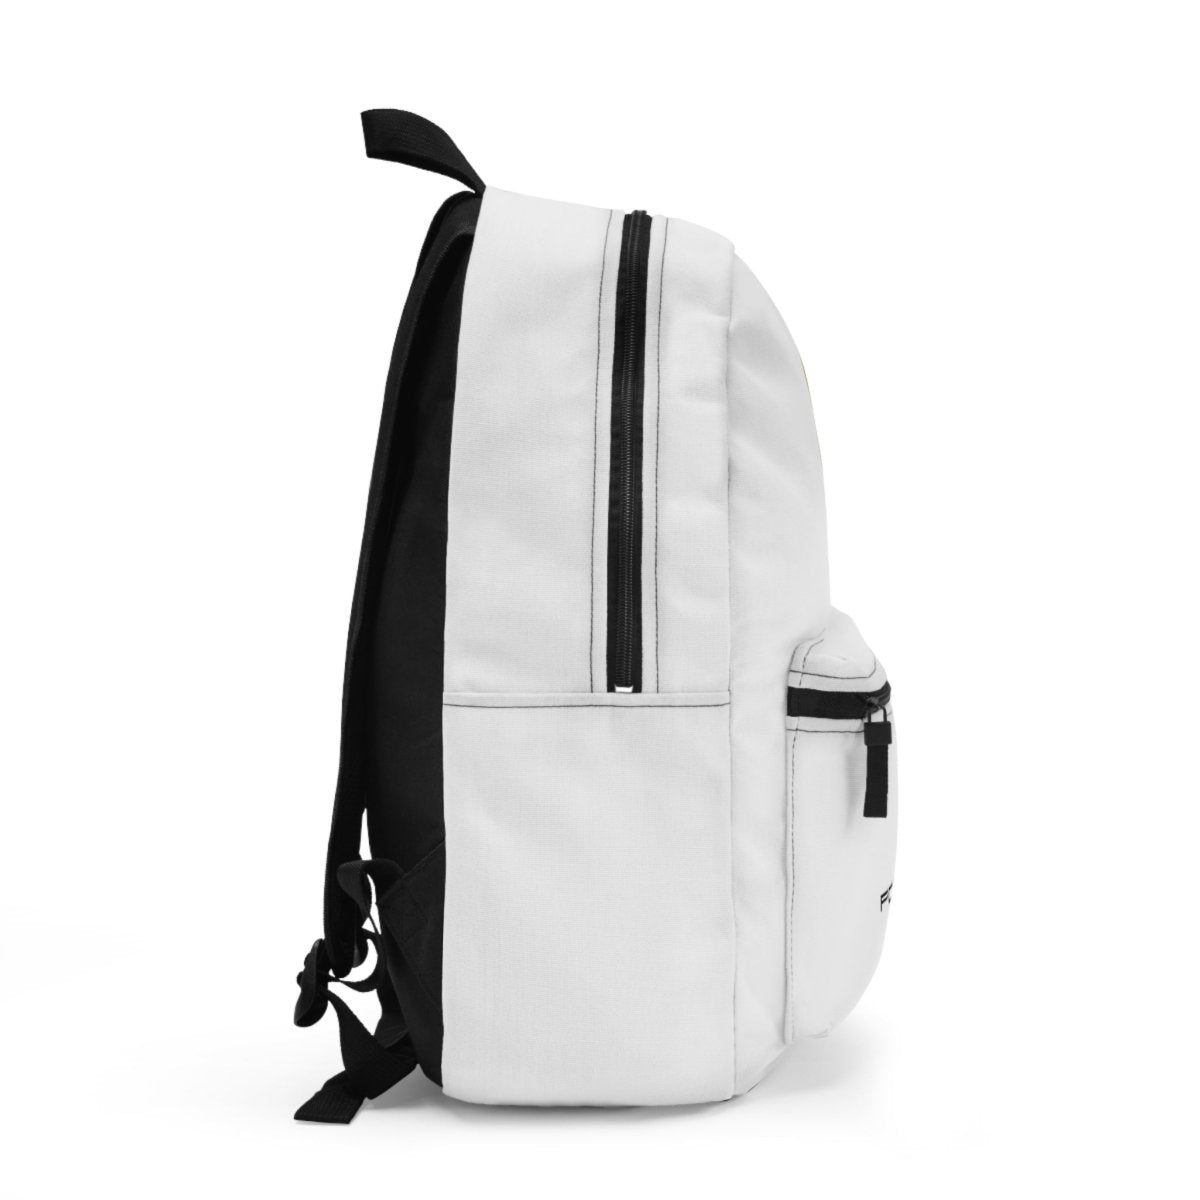 Porsche Crest Elegance Backpack in White - Bags - AI Print Spot